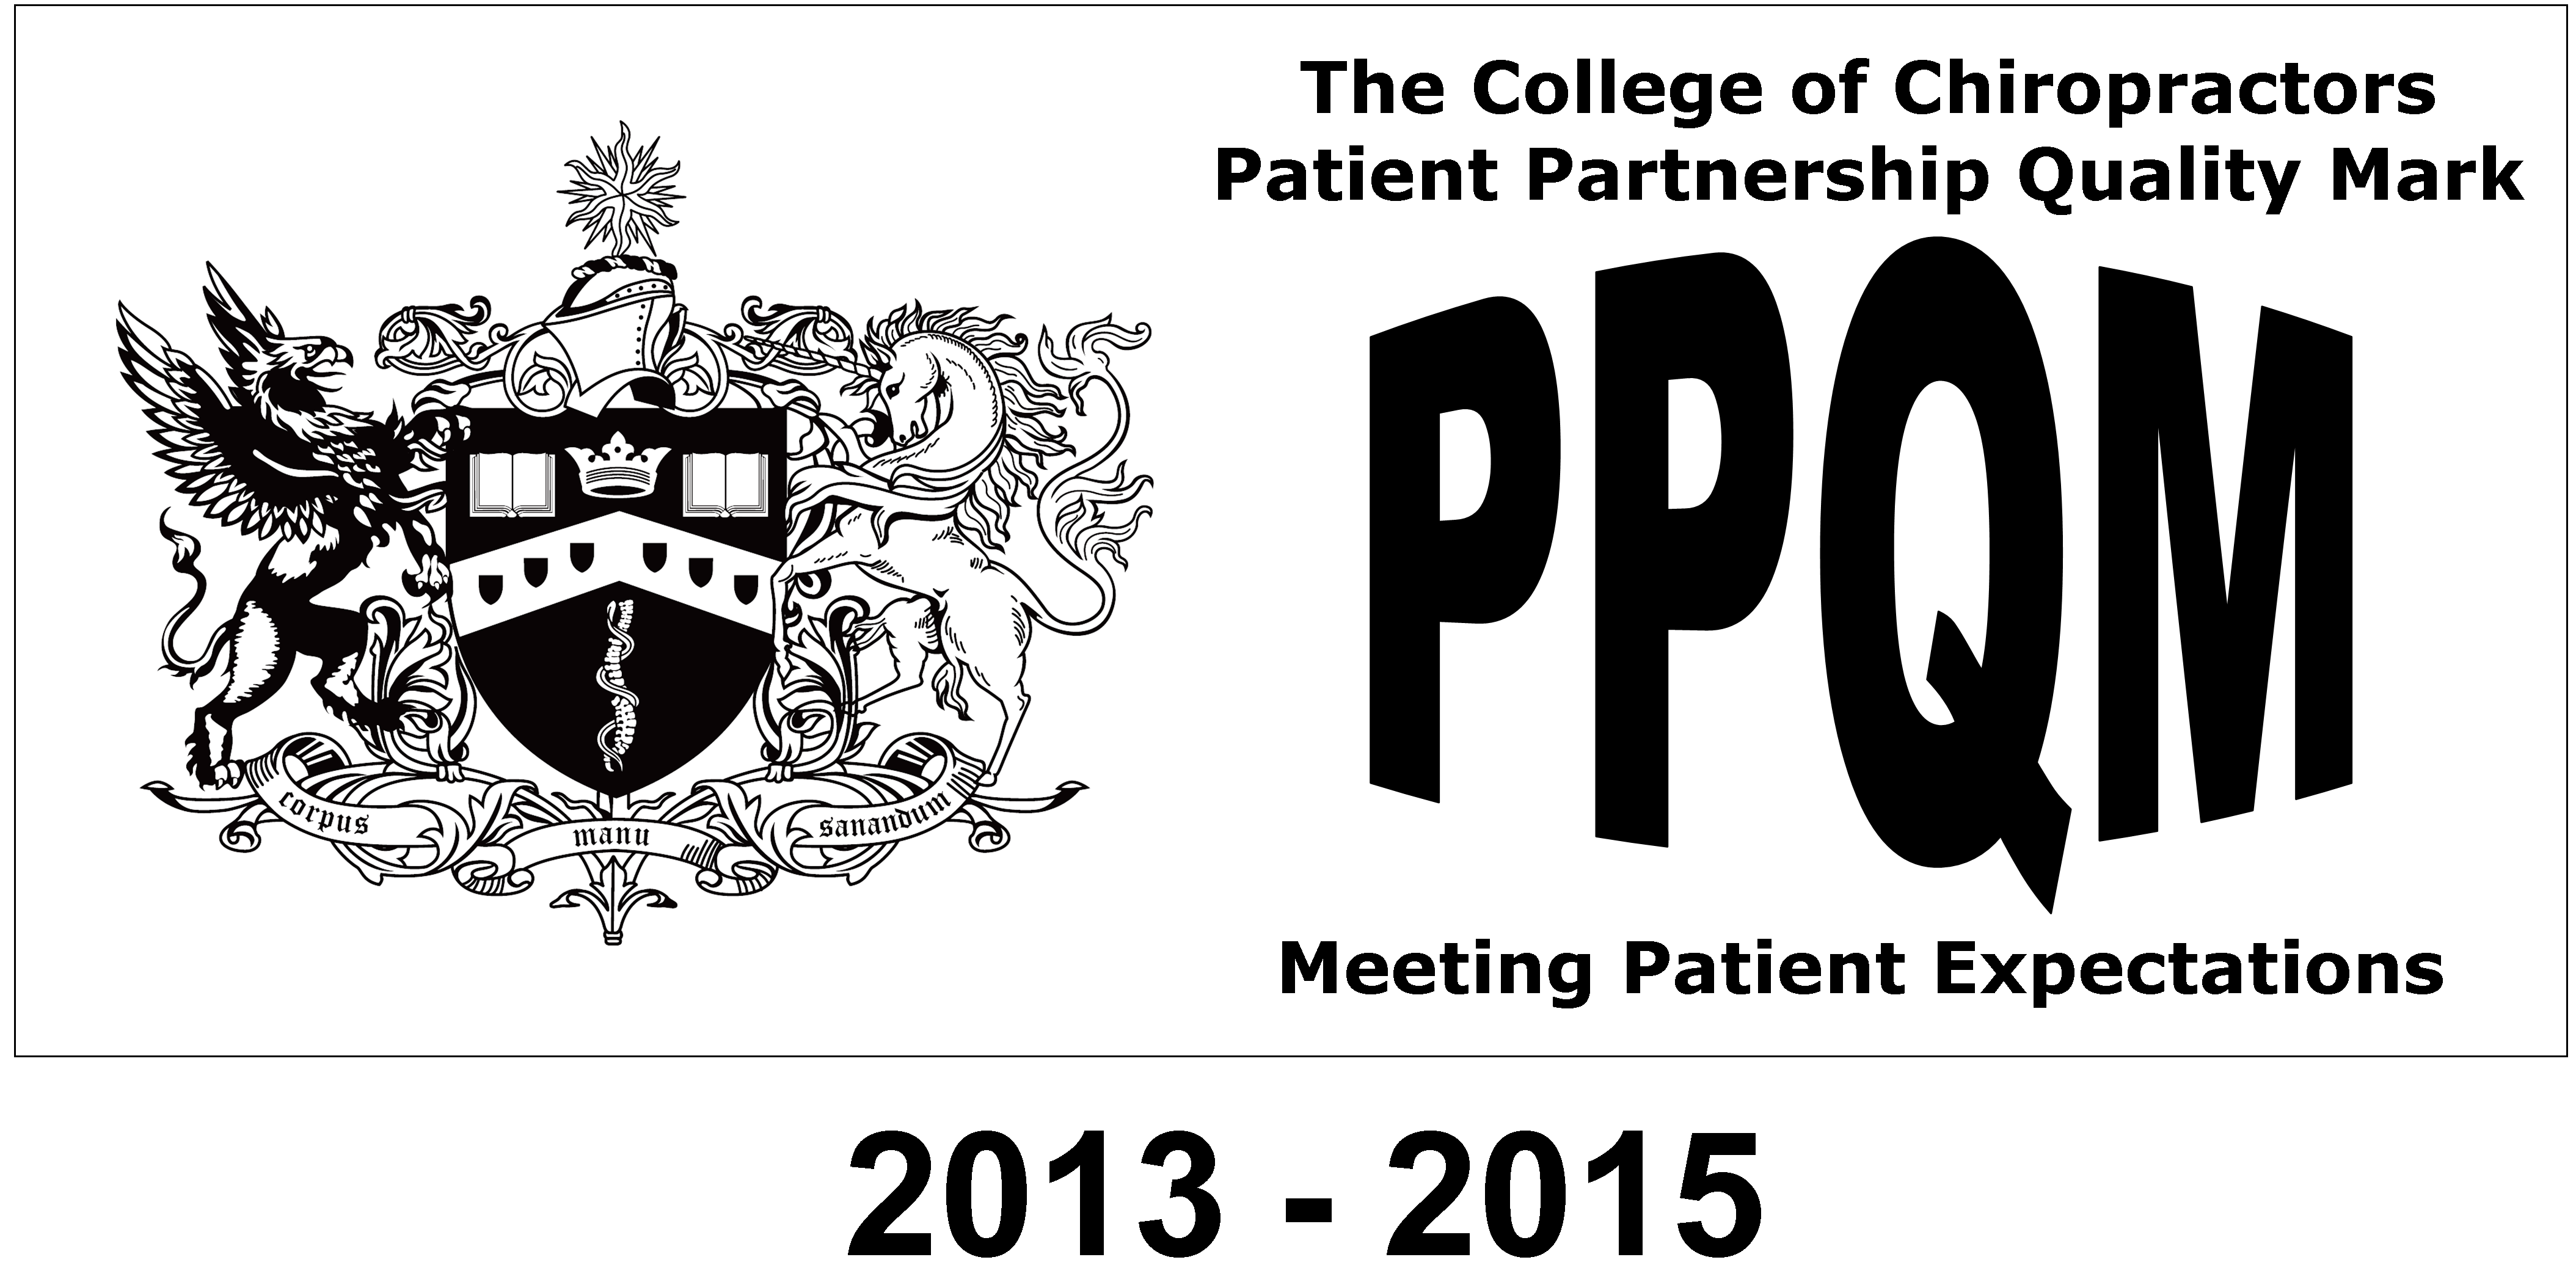 The College of Chiropractors PPQM 2013-2015